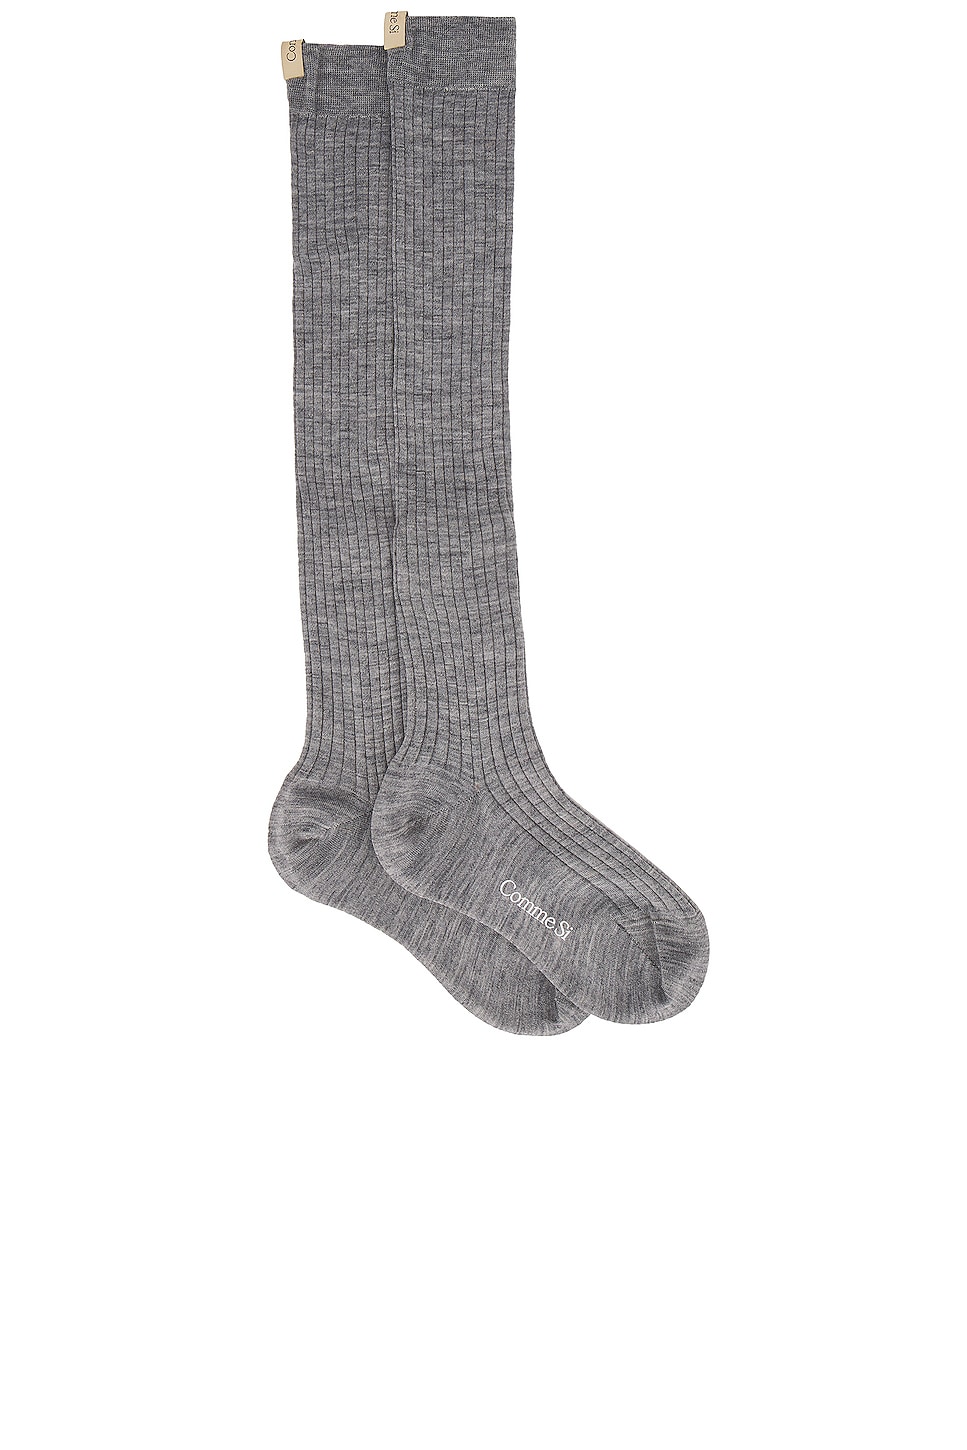 The Knee High Sock in Grey